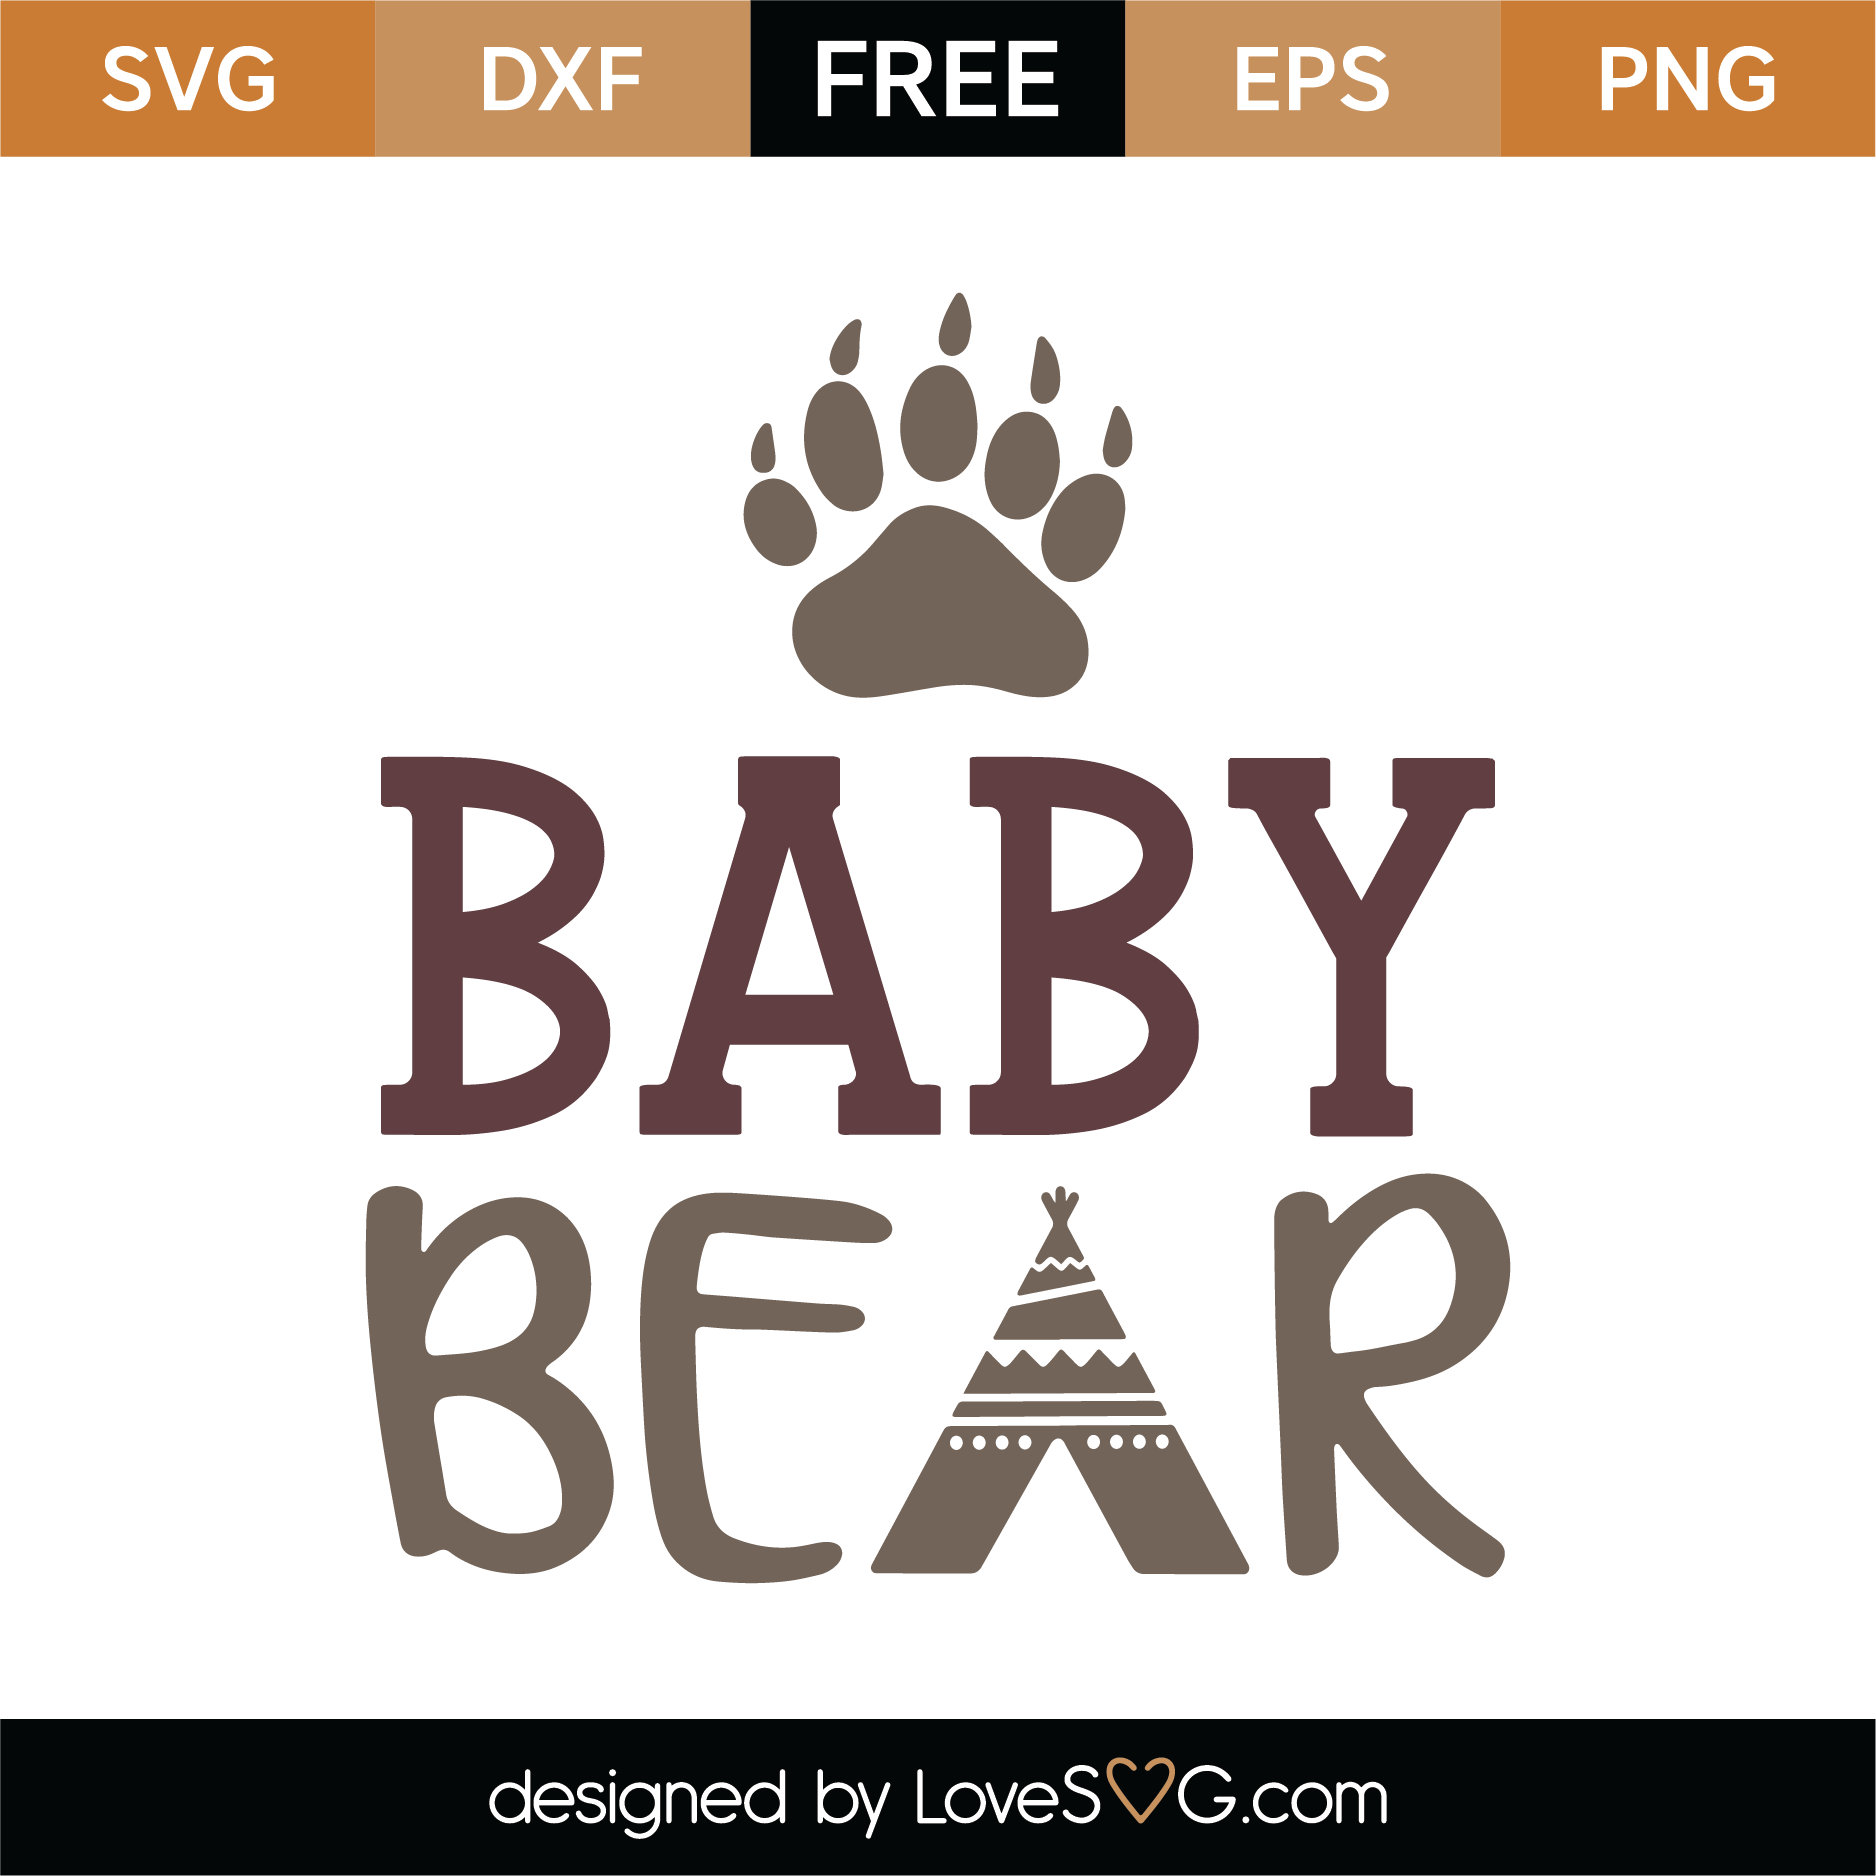 Download Free Baby Bear SVG Cut File | Lovesvg.com